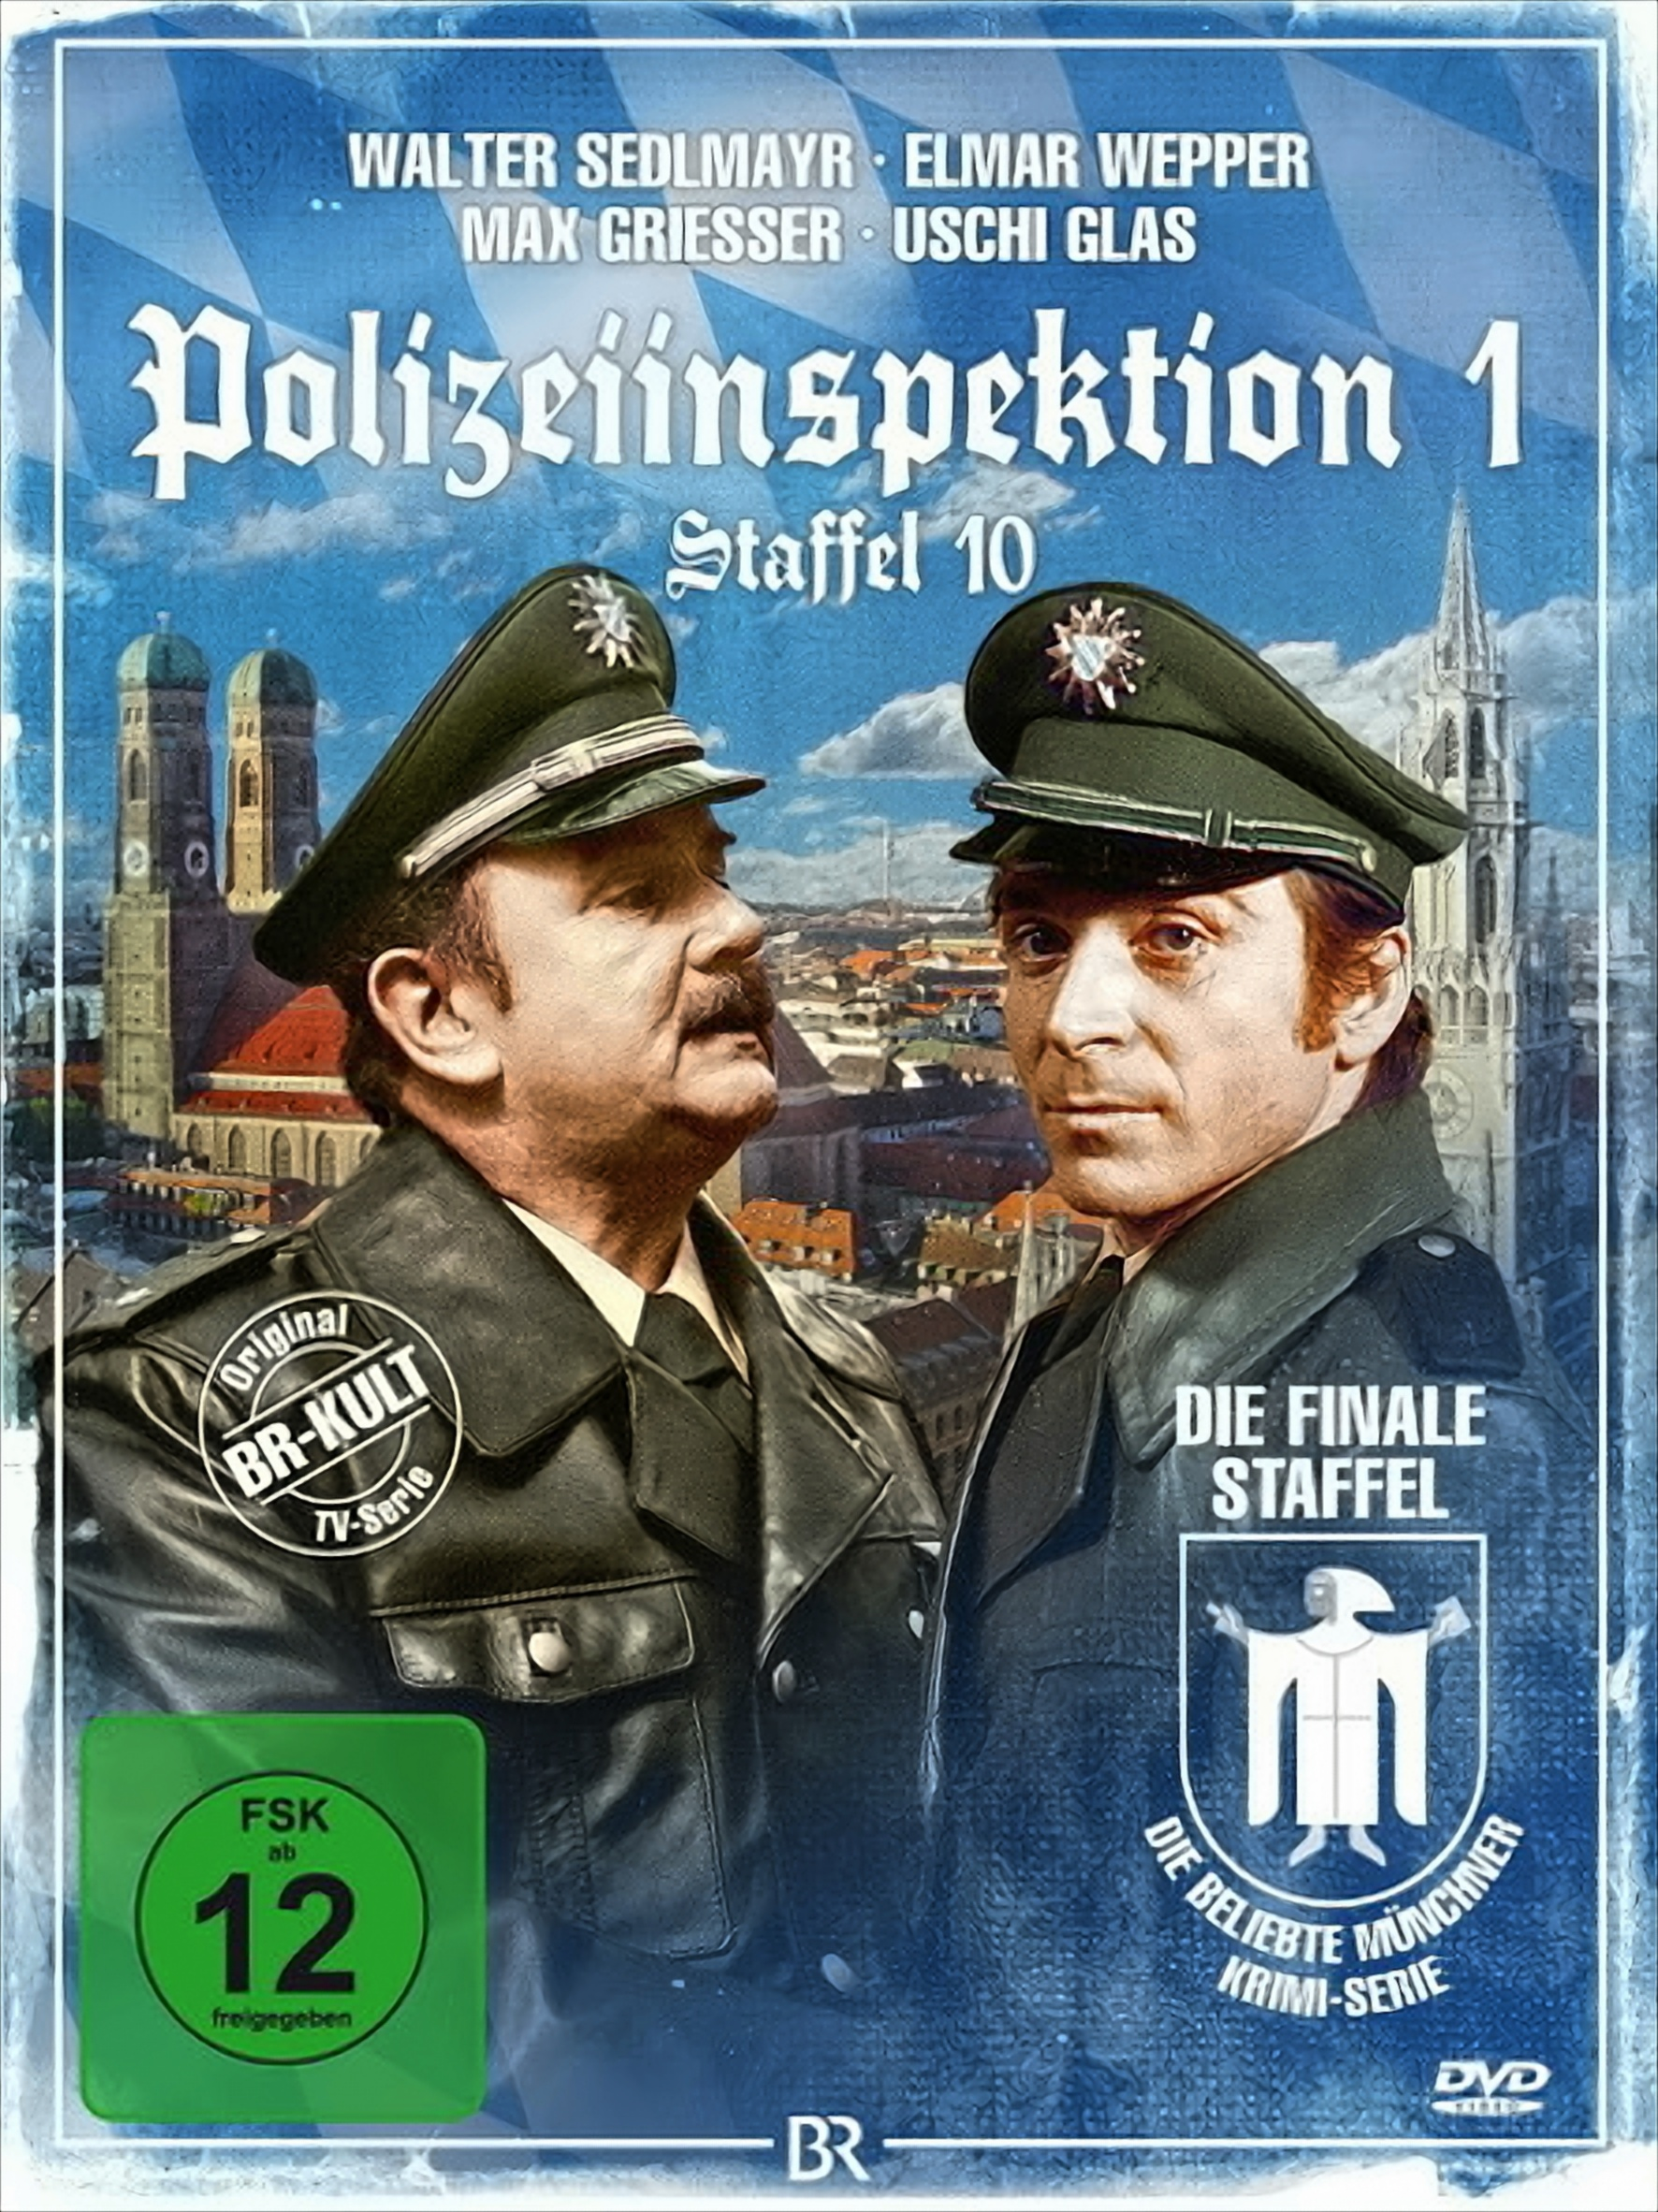 Polizeiinspektion 1 - Staffel 10 DVD